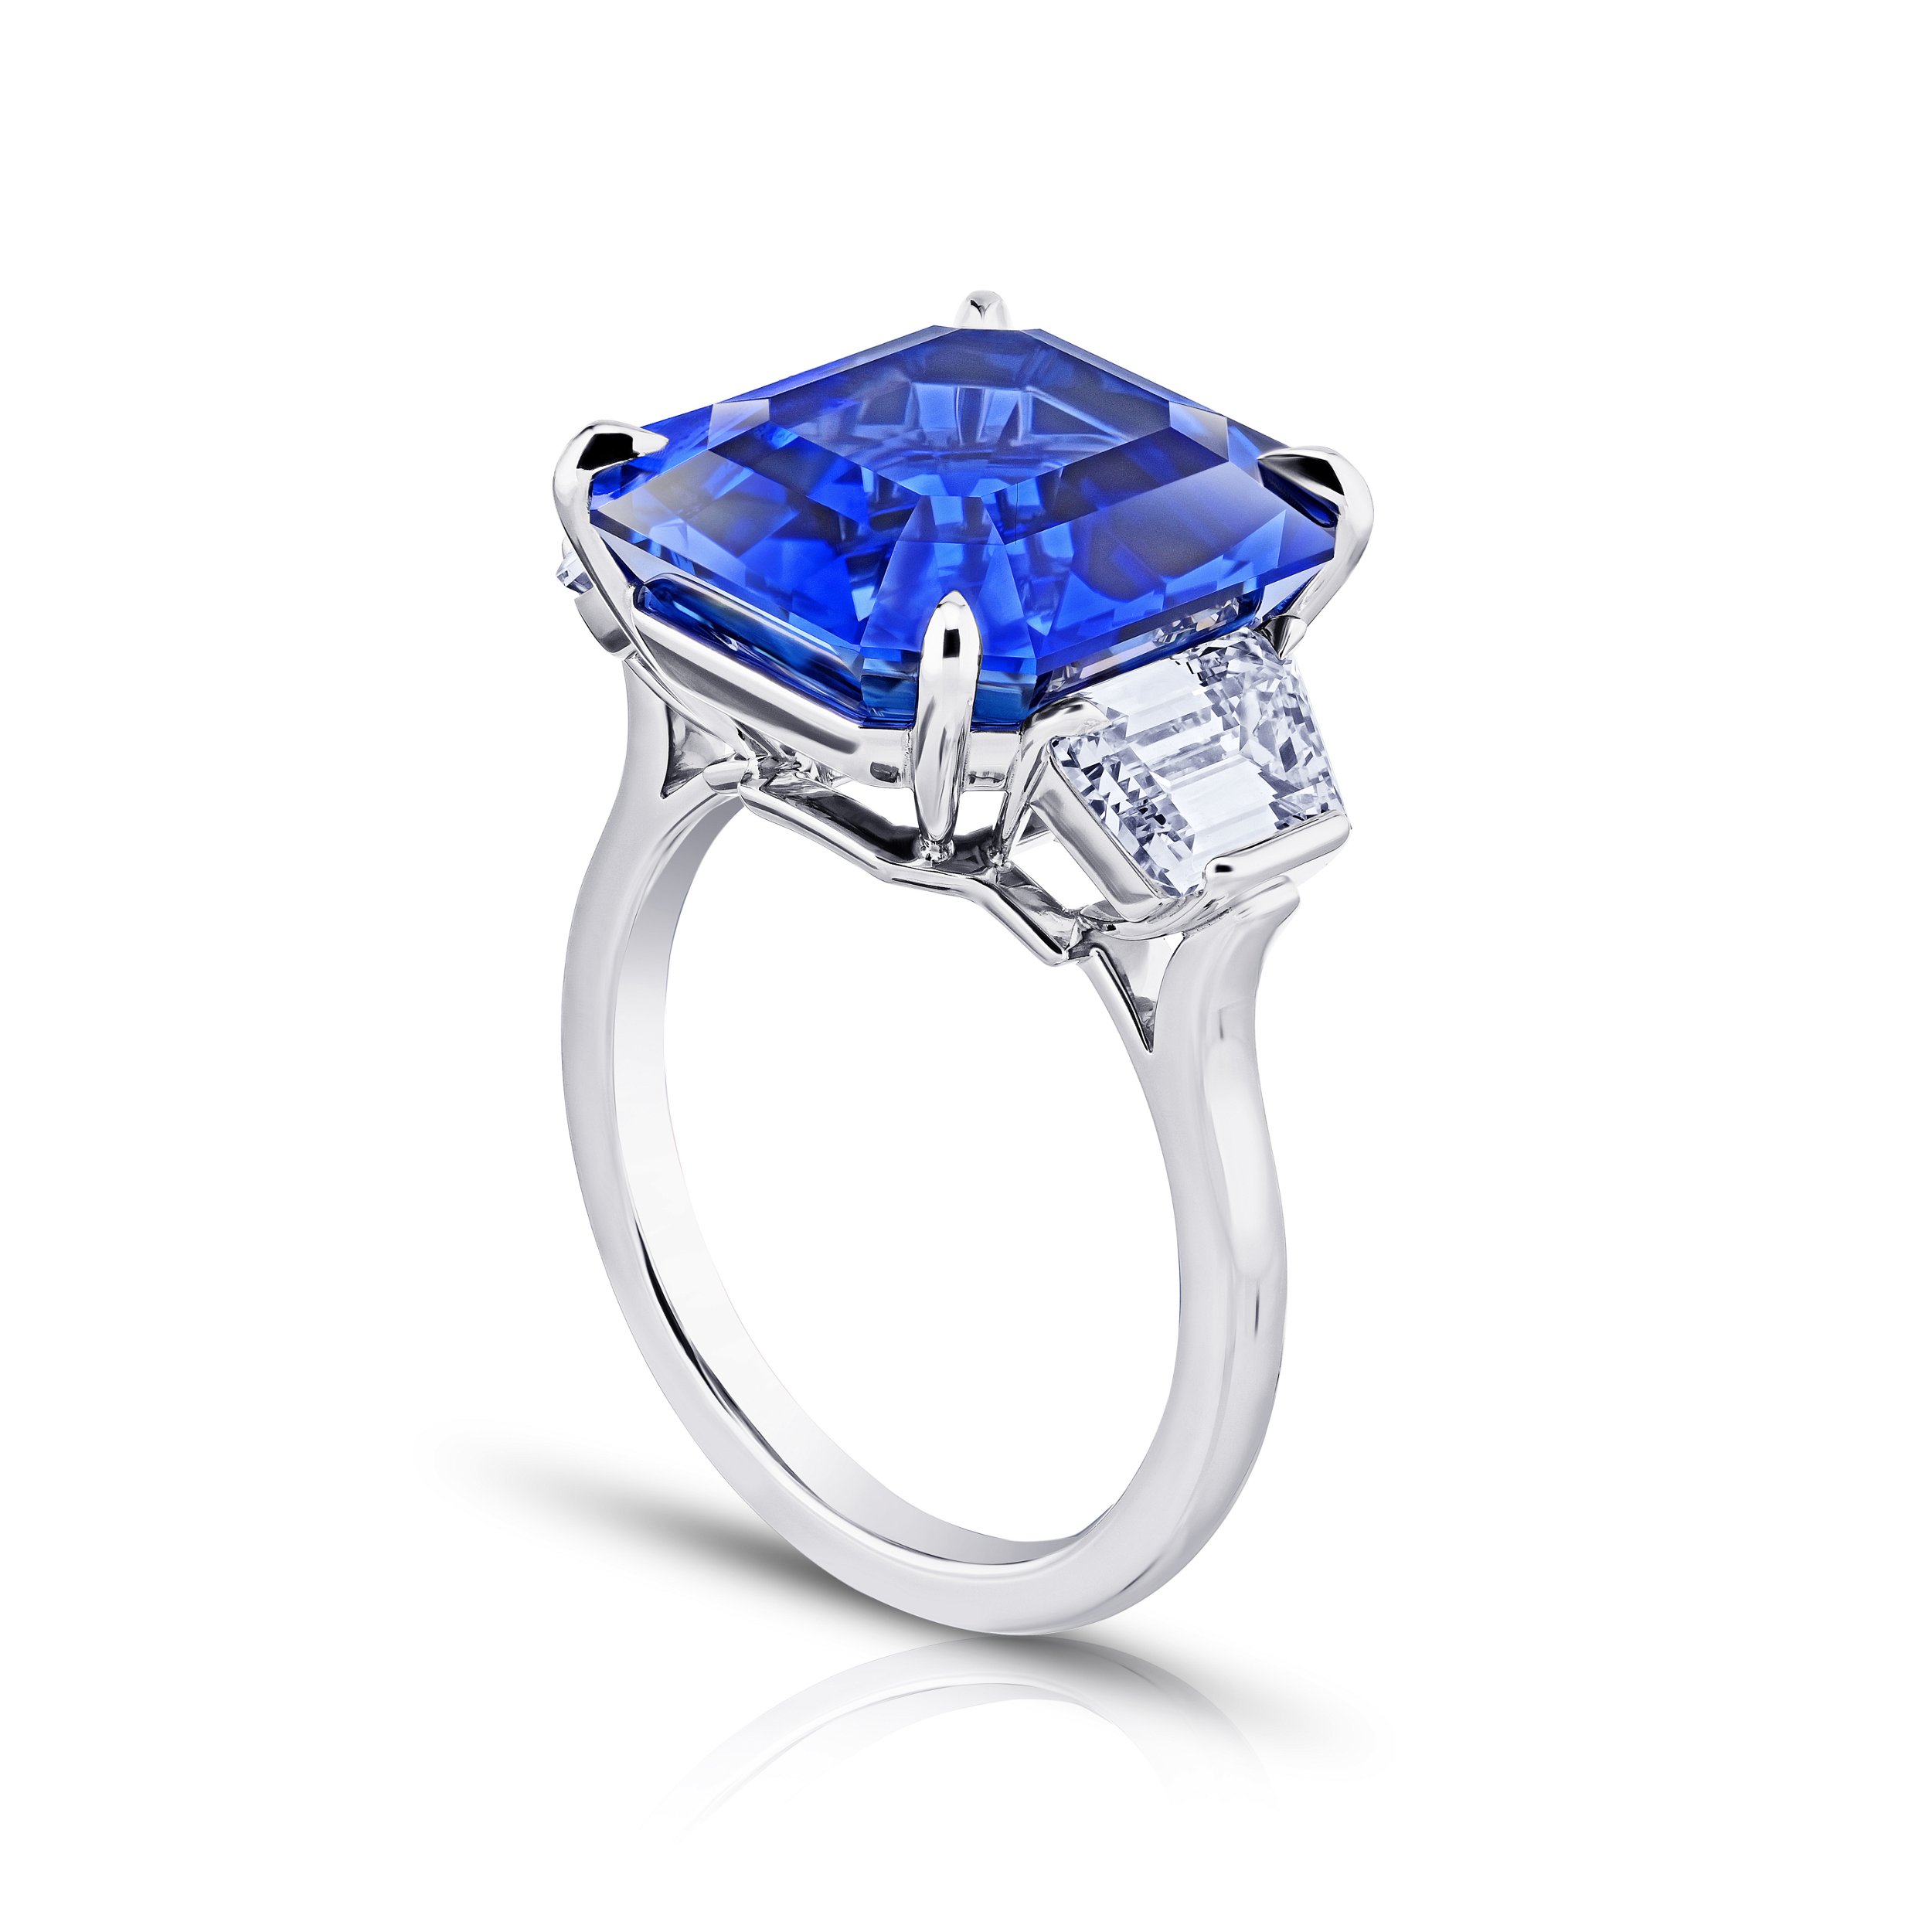 13.71 Carat Emerald Cut Sapphire Ring